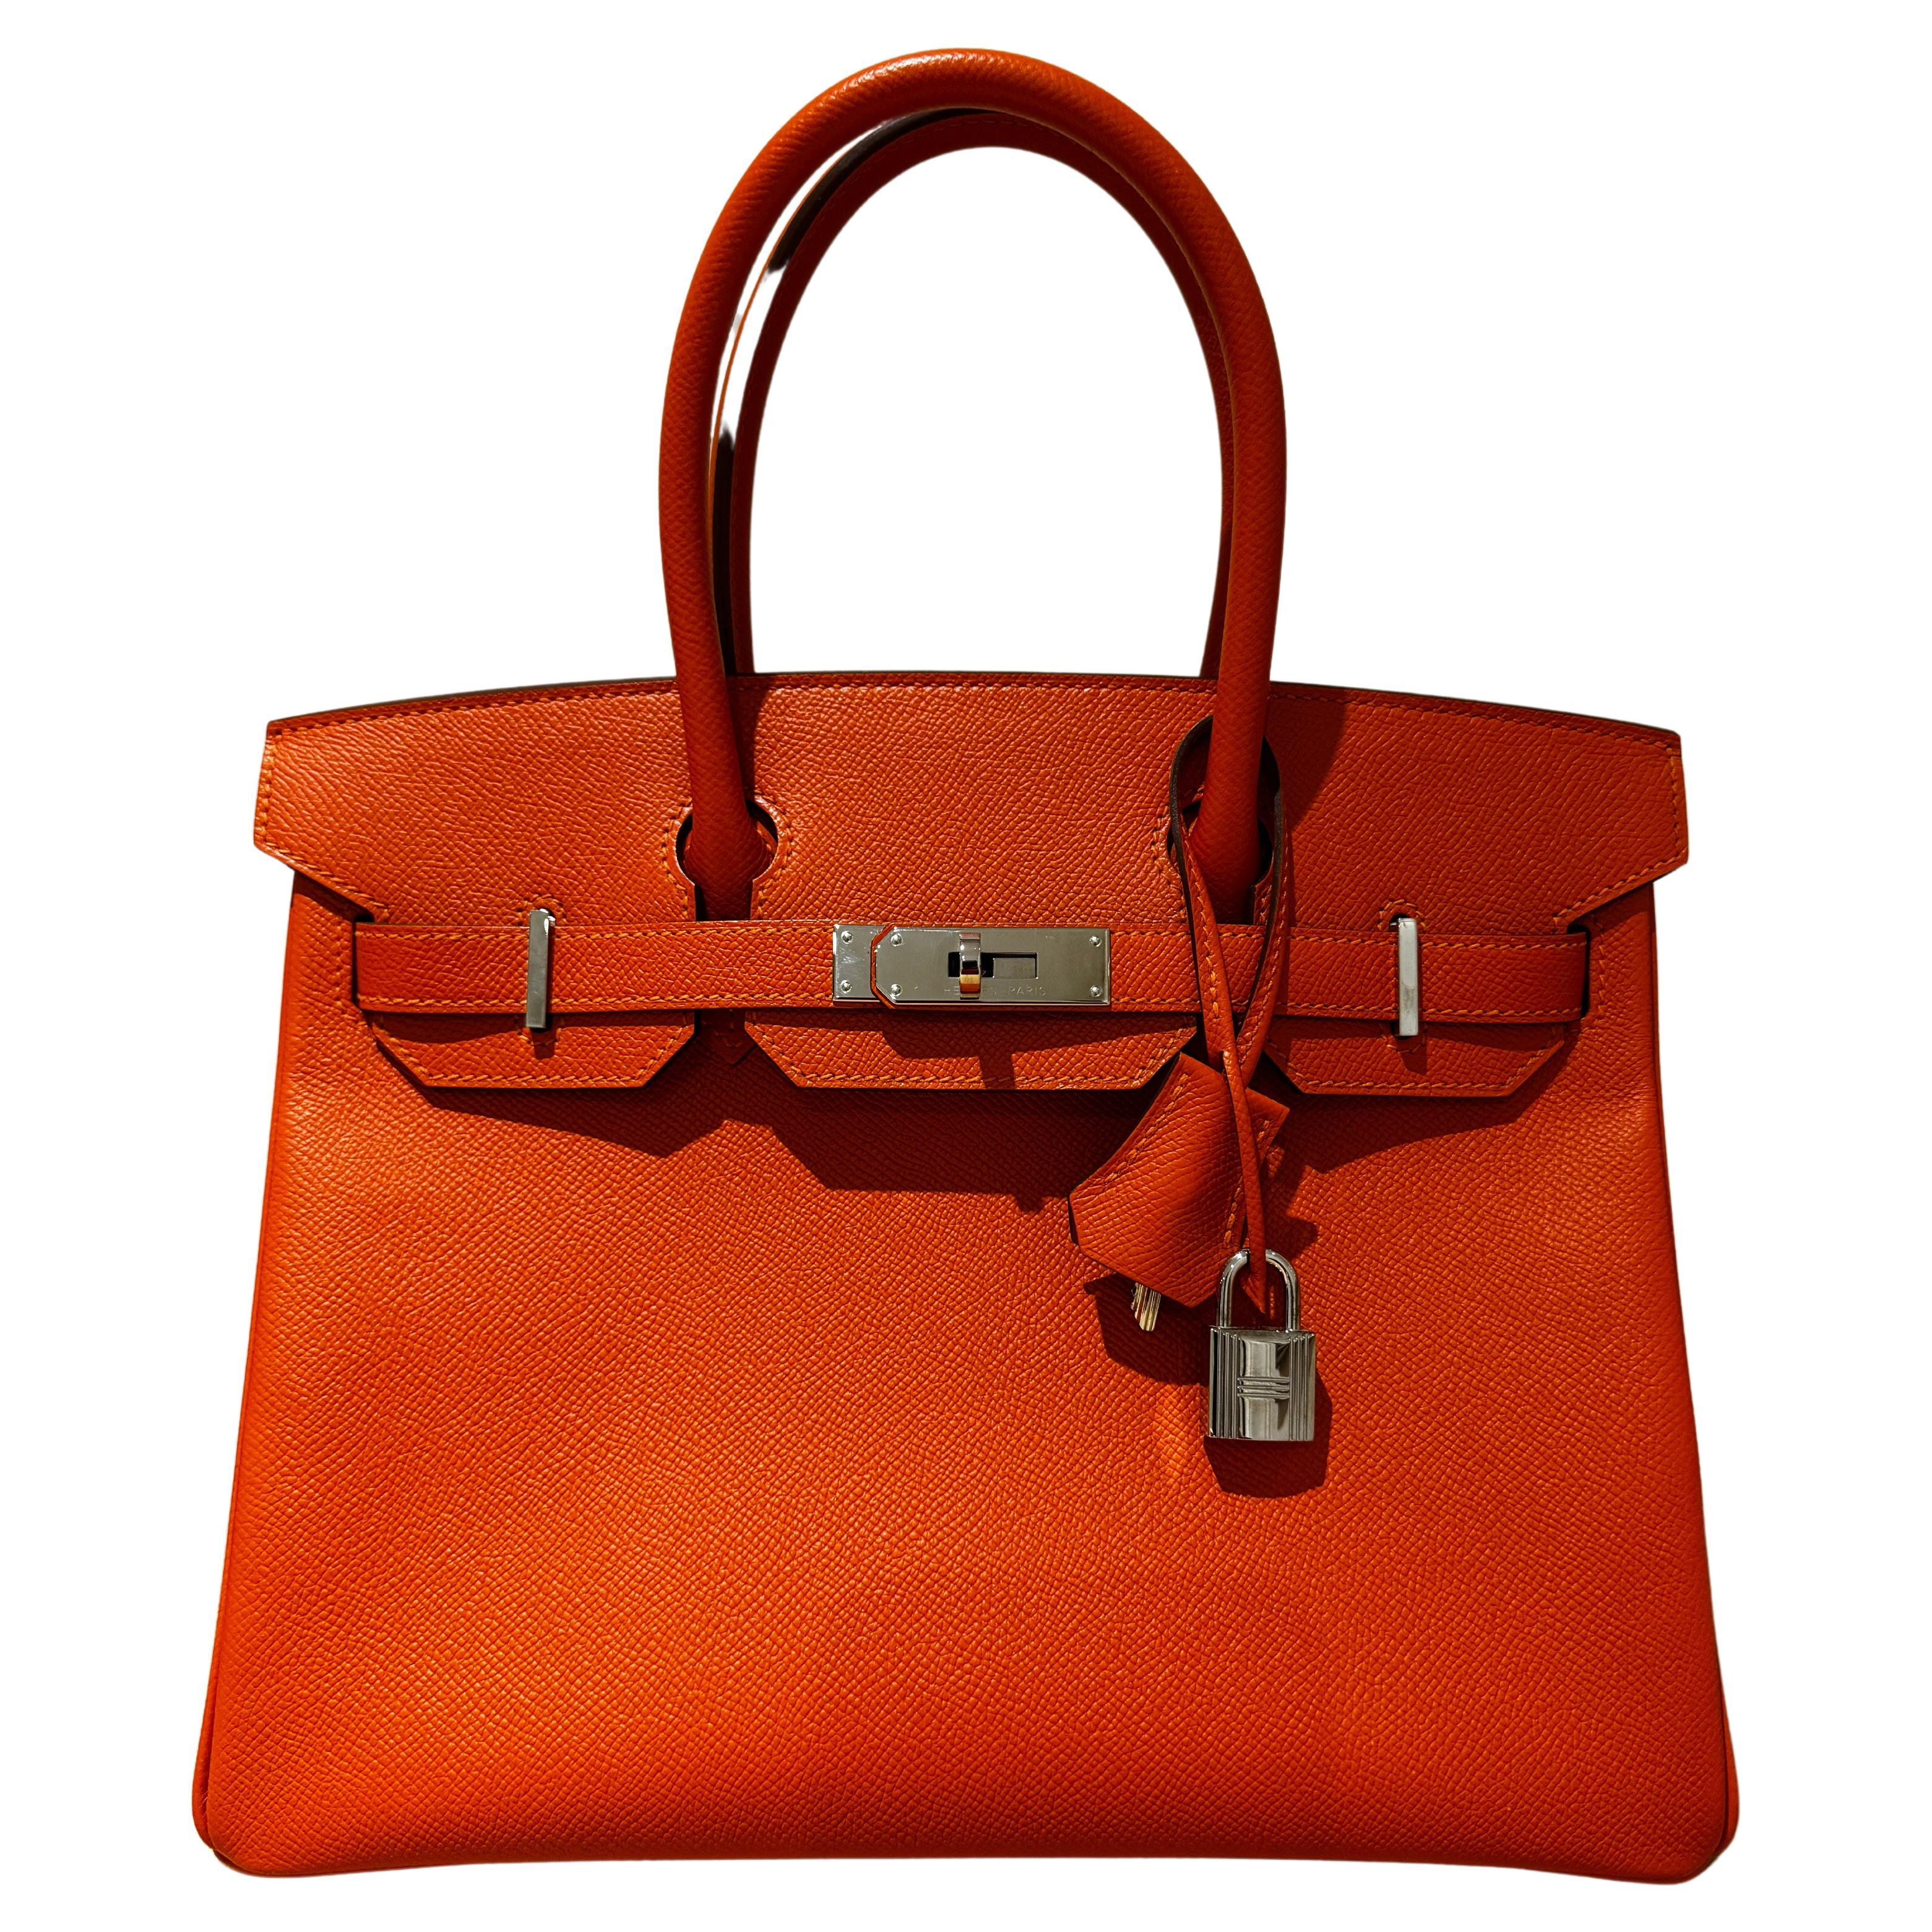 Hermes Birkin 30 orange epsom gold hardware bag